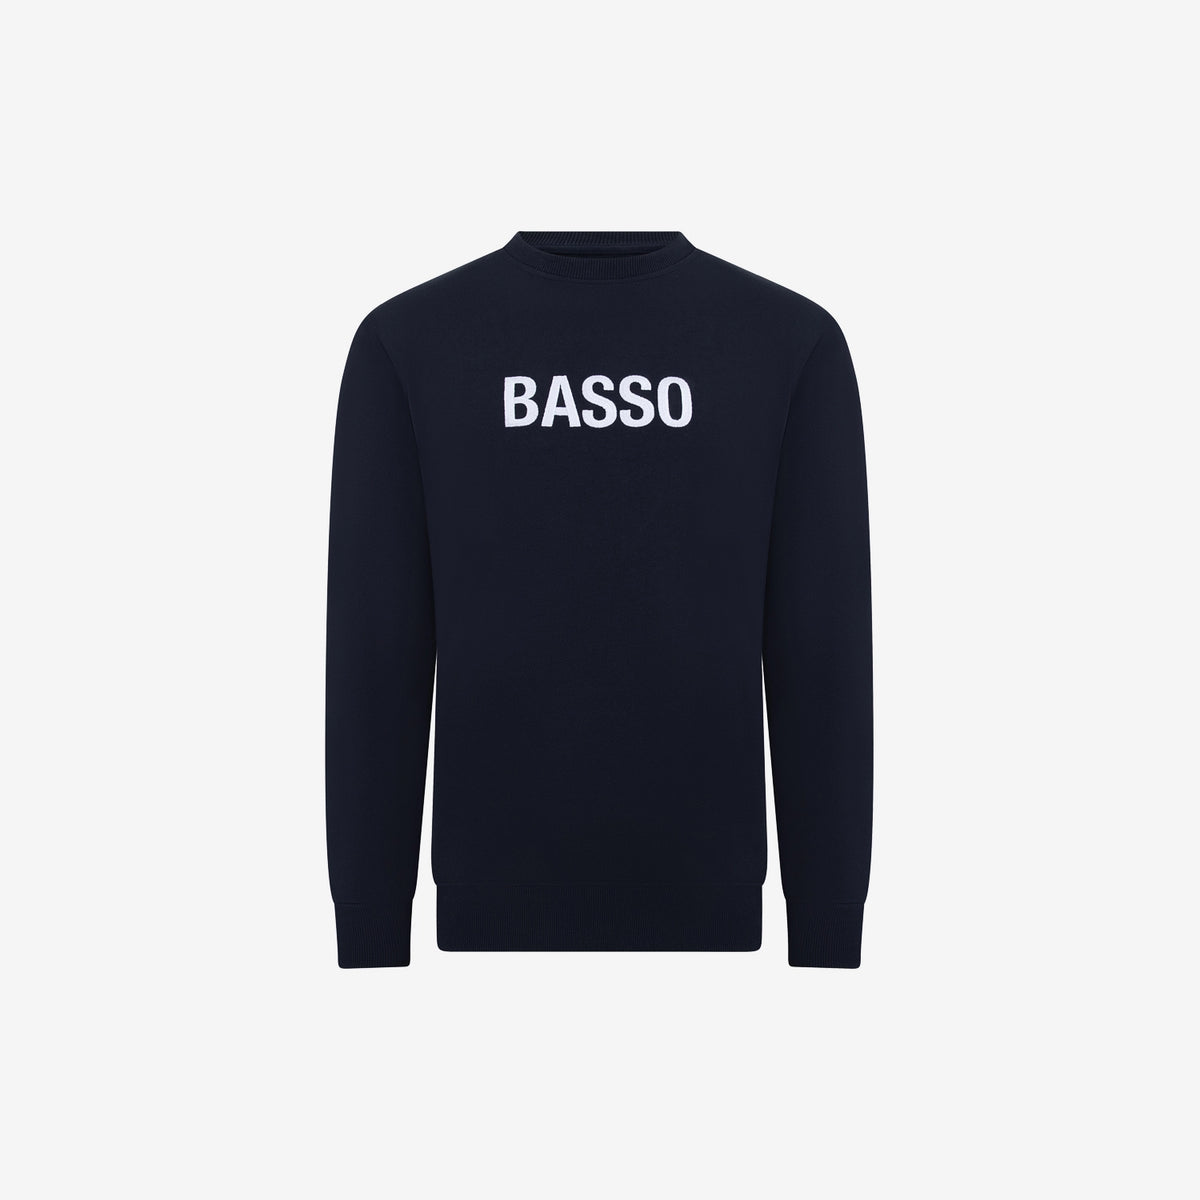 Basso Authentic Sweatshirt